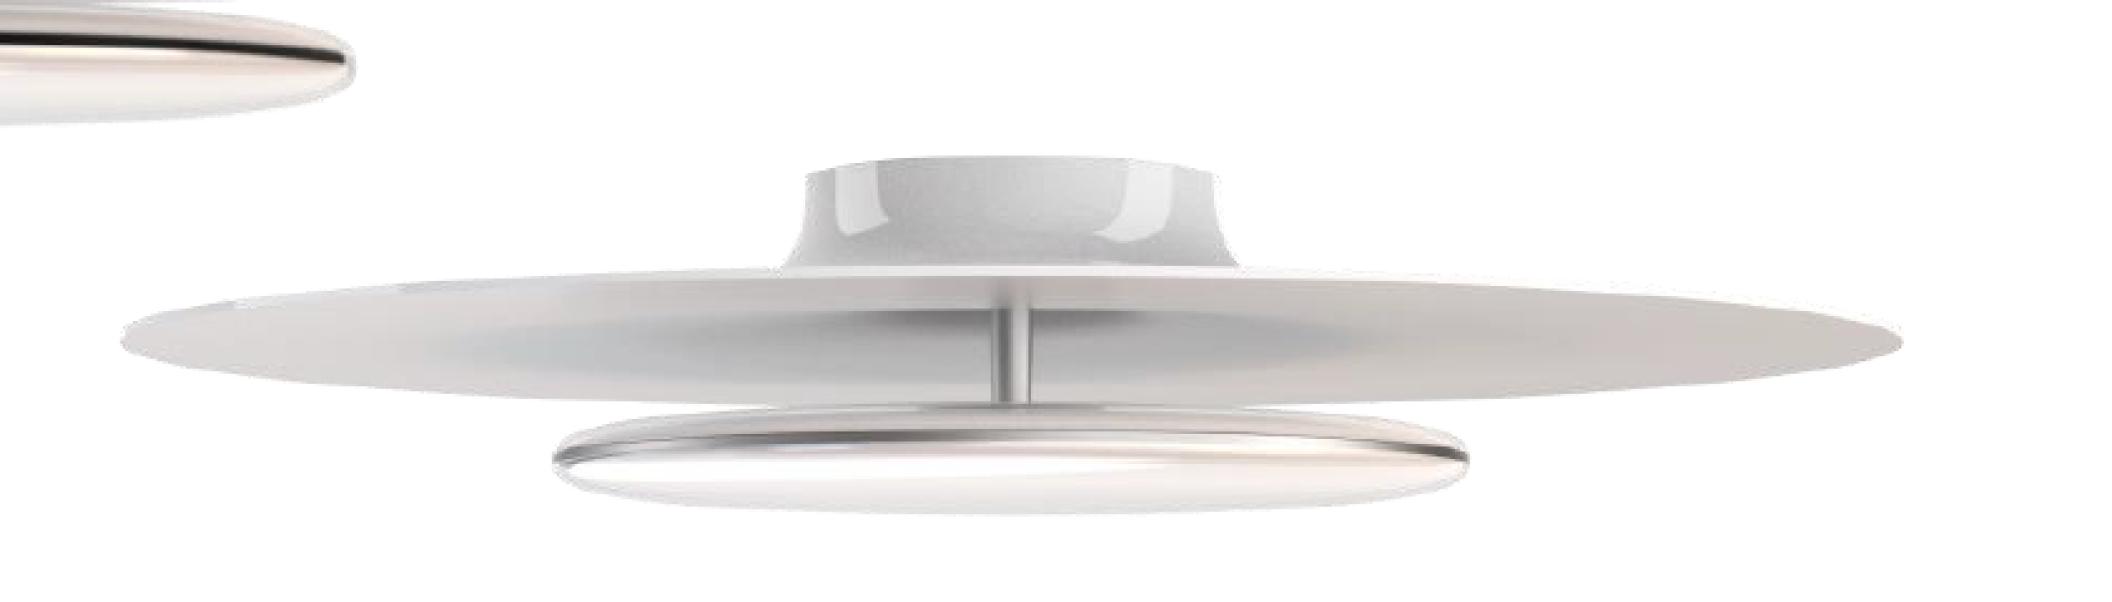 Lampada a plafone led Philips Garnet 40W 2700K diametro 50cm bianca - 19525700 01